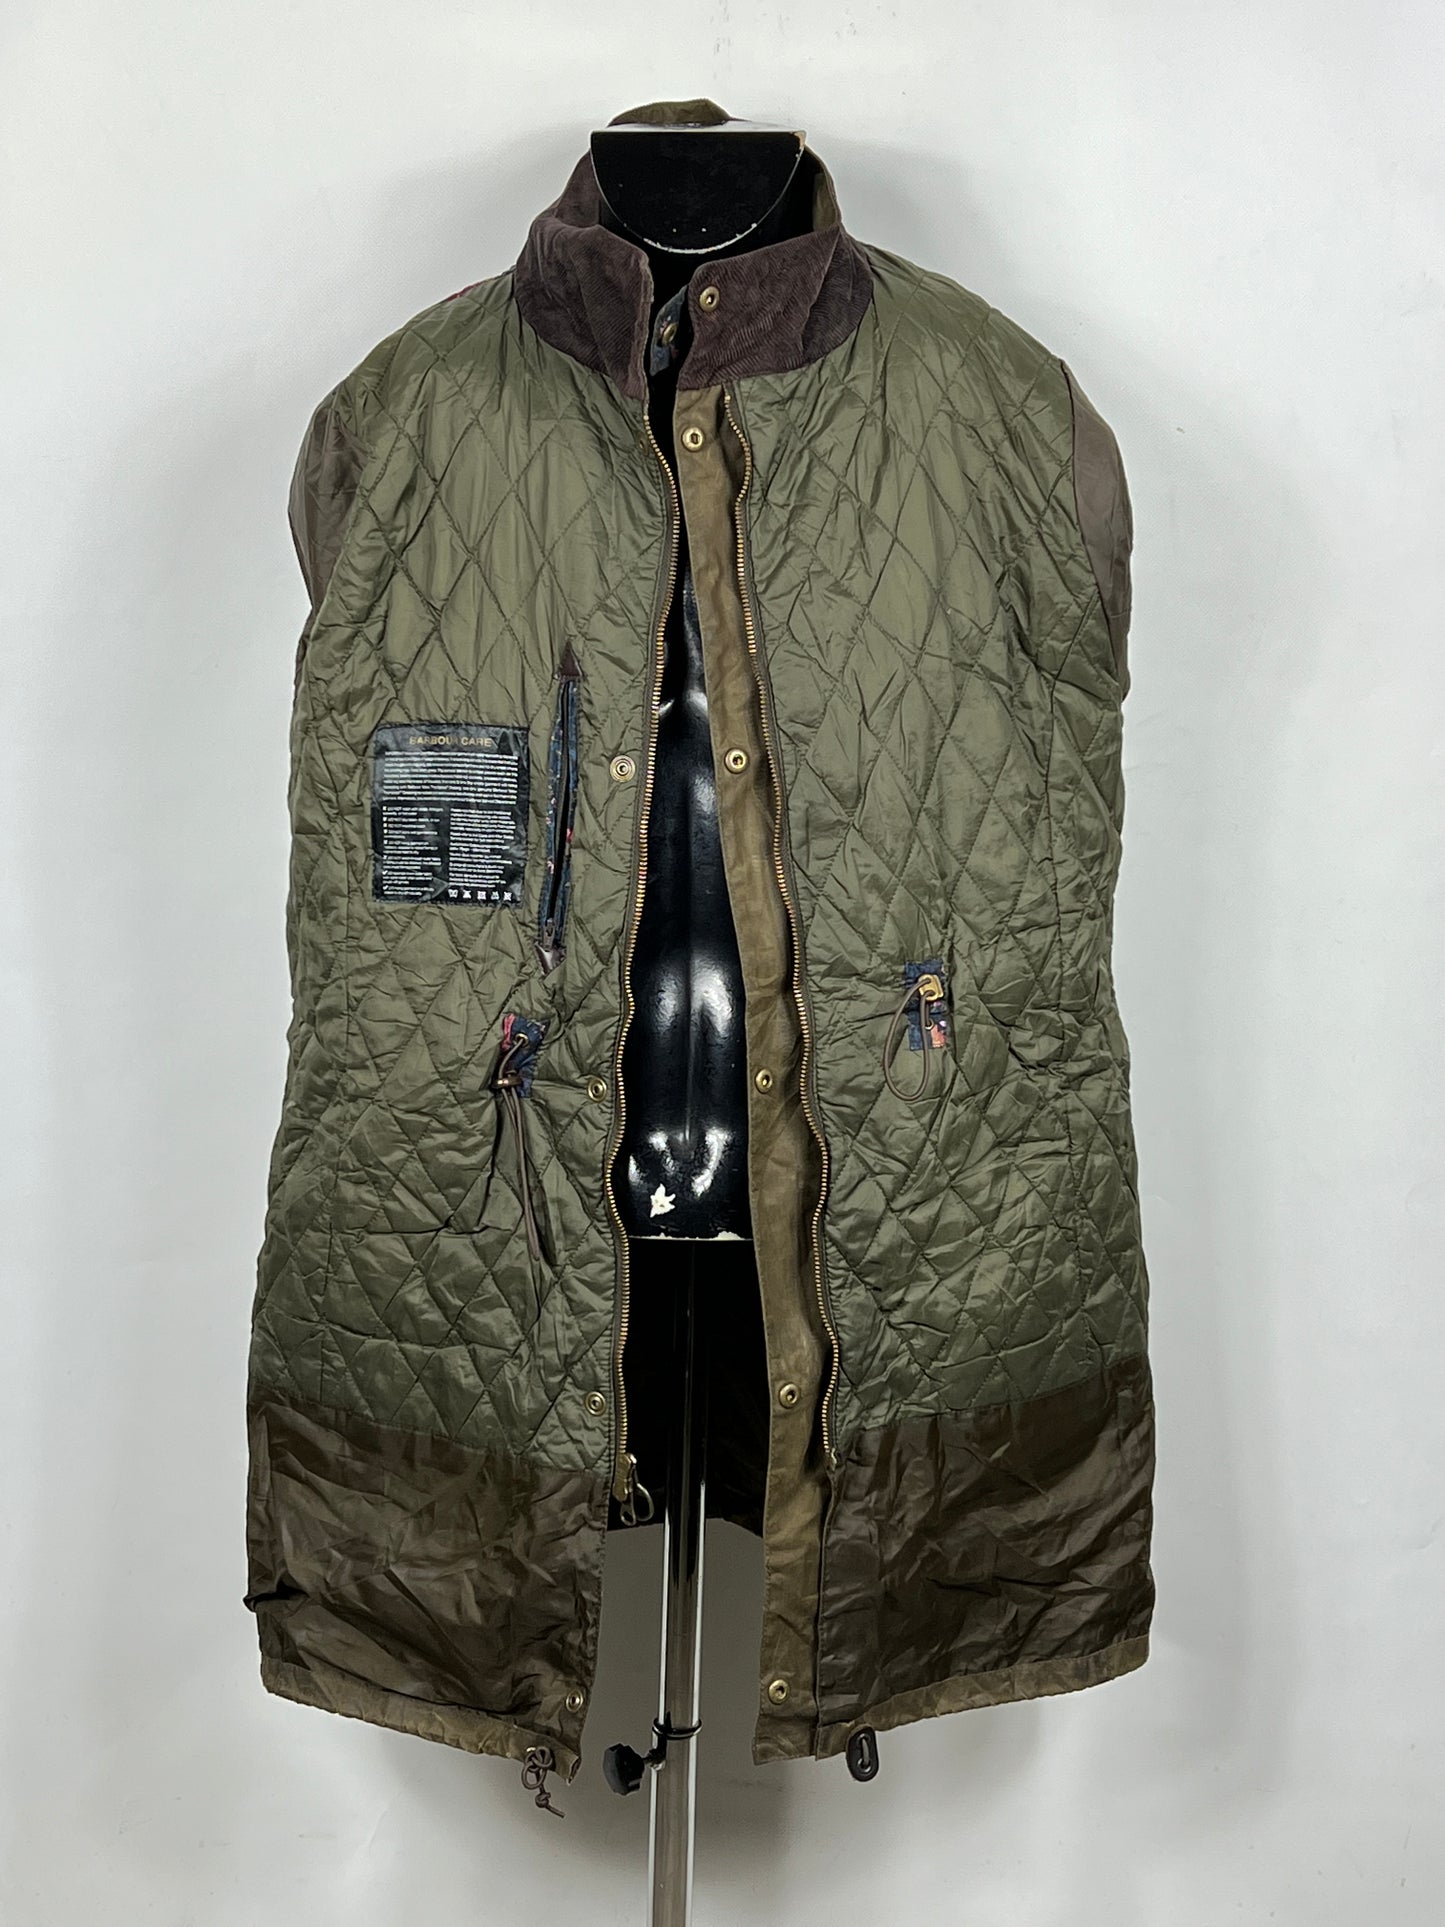 Parka Barbour Verde Unisex tg.46/48 ita - Winter Tors wax Parka Green jacket size uk16